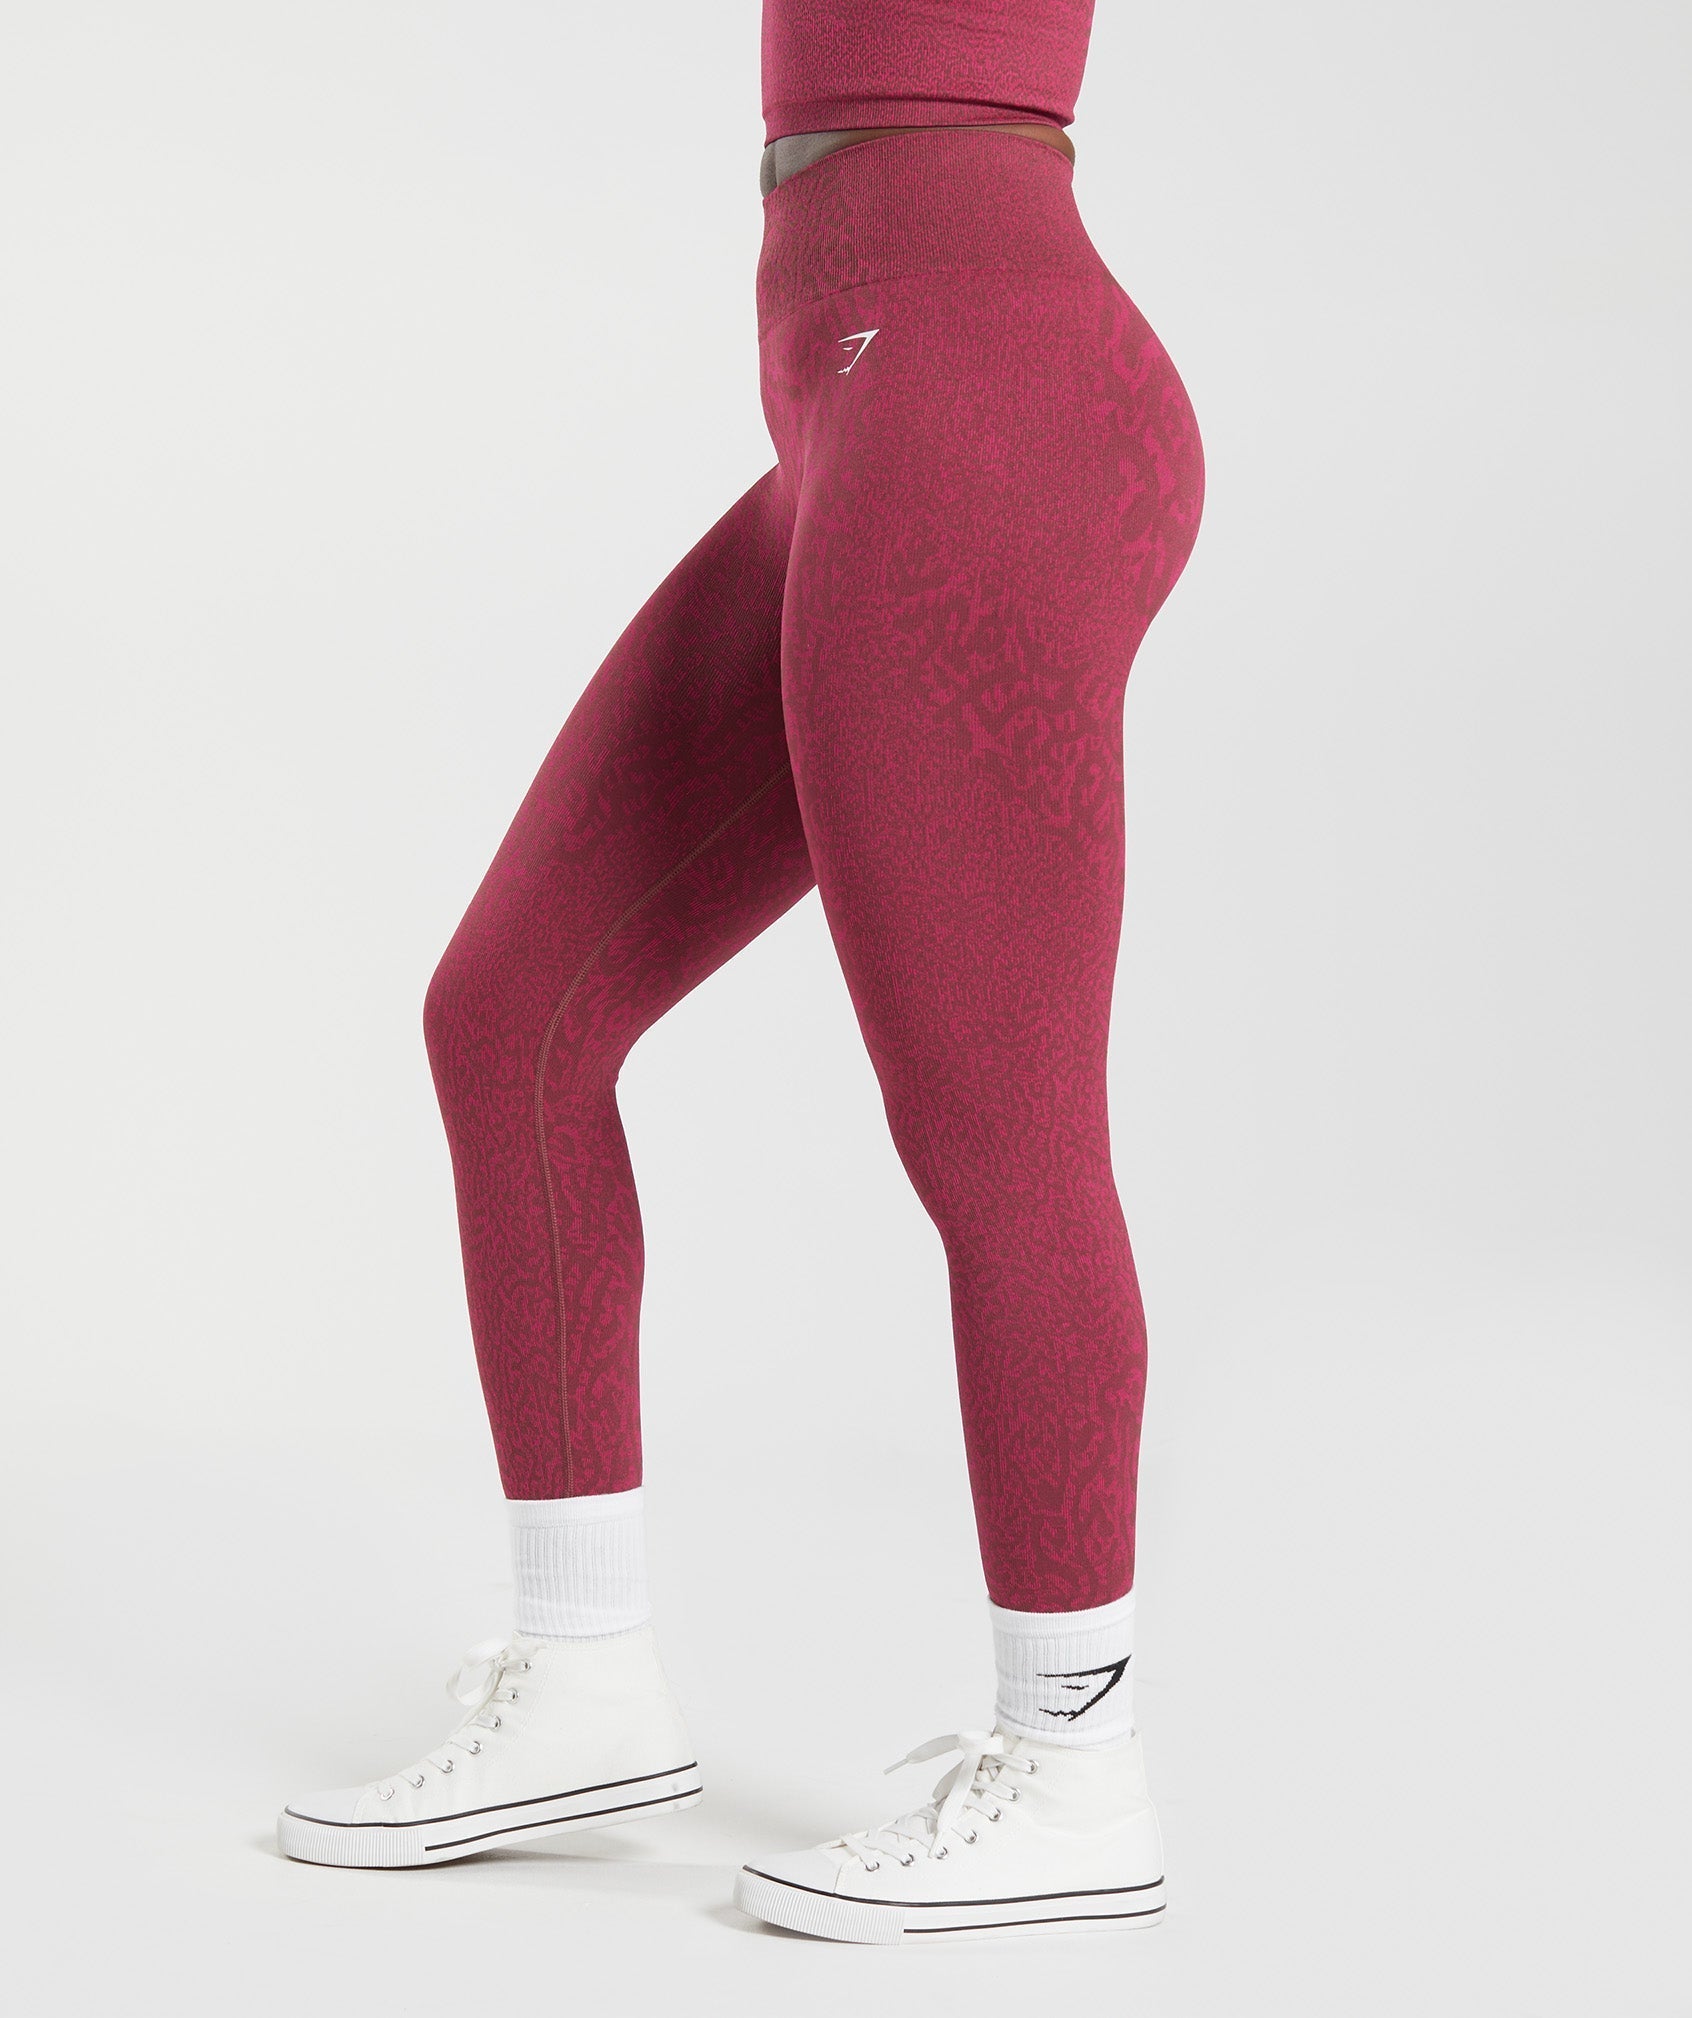 GYMSHARK Women's GS Power High Rise Leggings, Tights, Red-brown print :  : Fashion